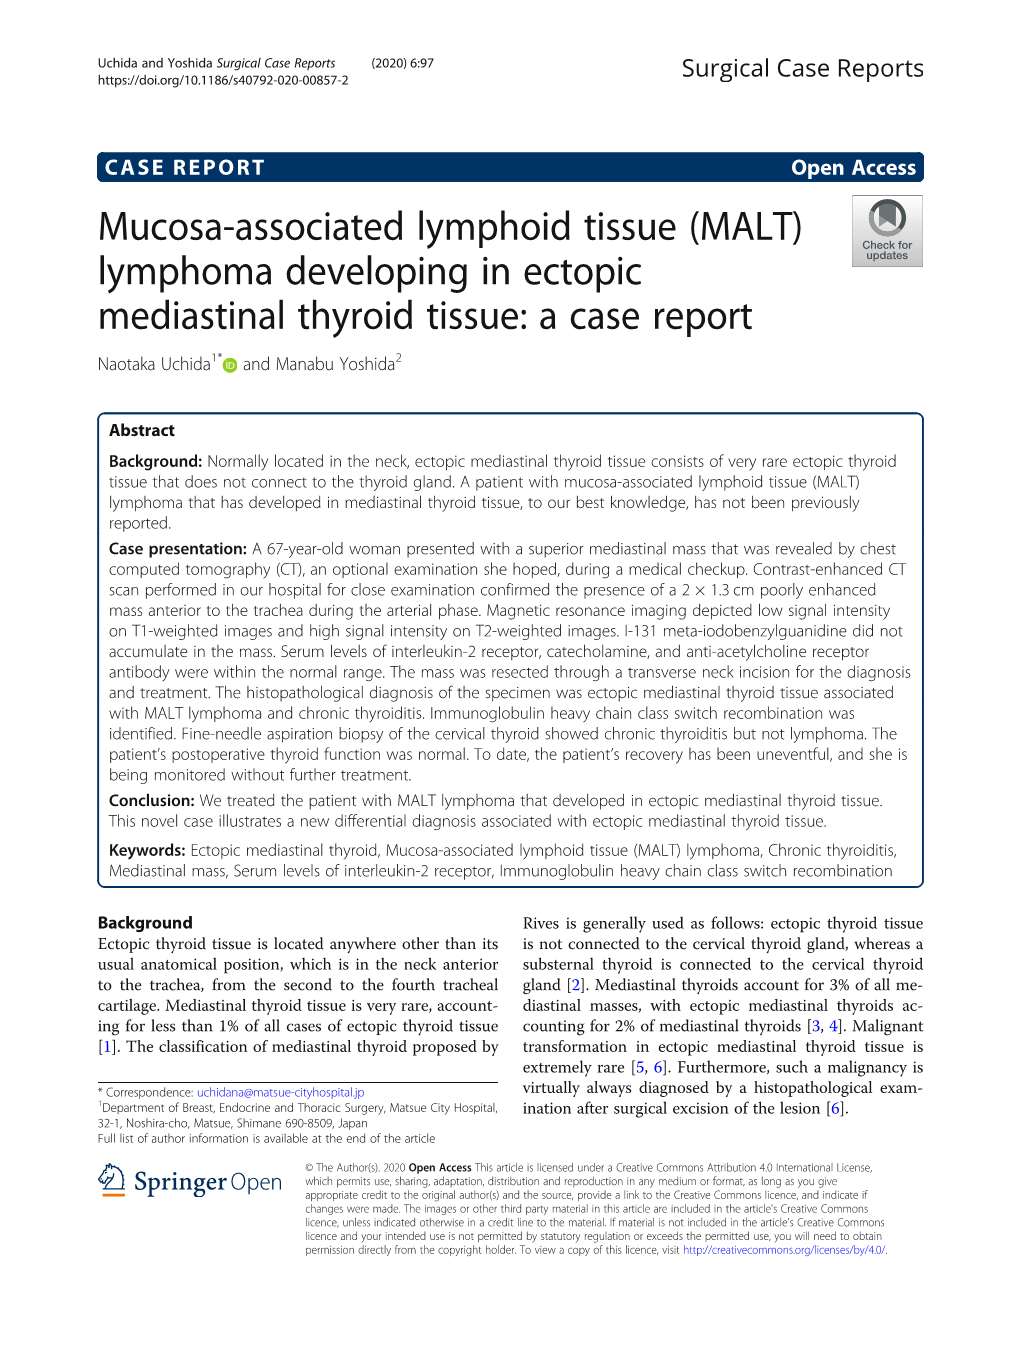 (MALT) Lymphoma Developing in Ectopic Mediastinal Thyroid Tissue: a Case Report Naotaka Uchida1* and Manabu Yoshida2